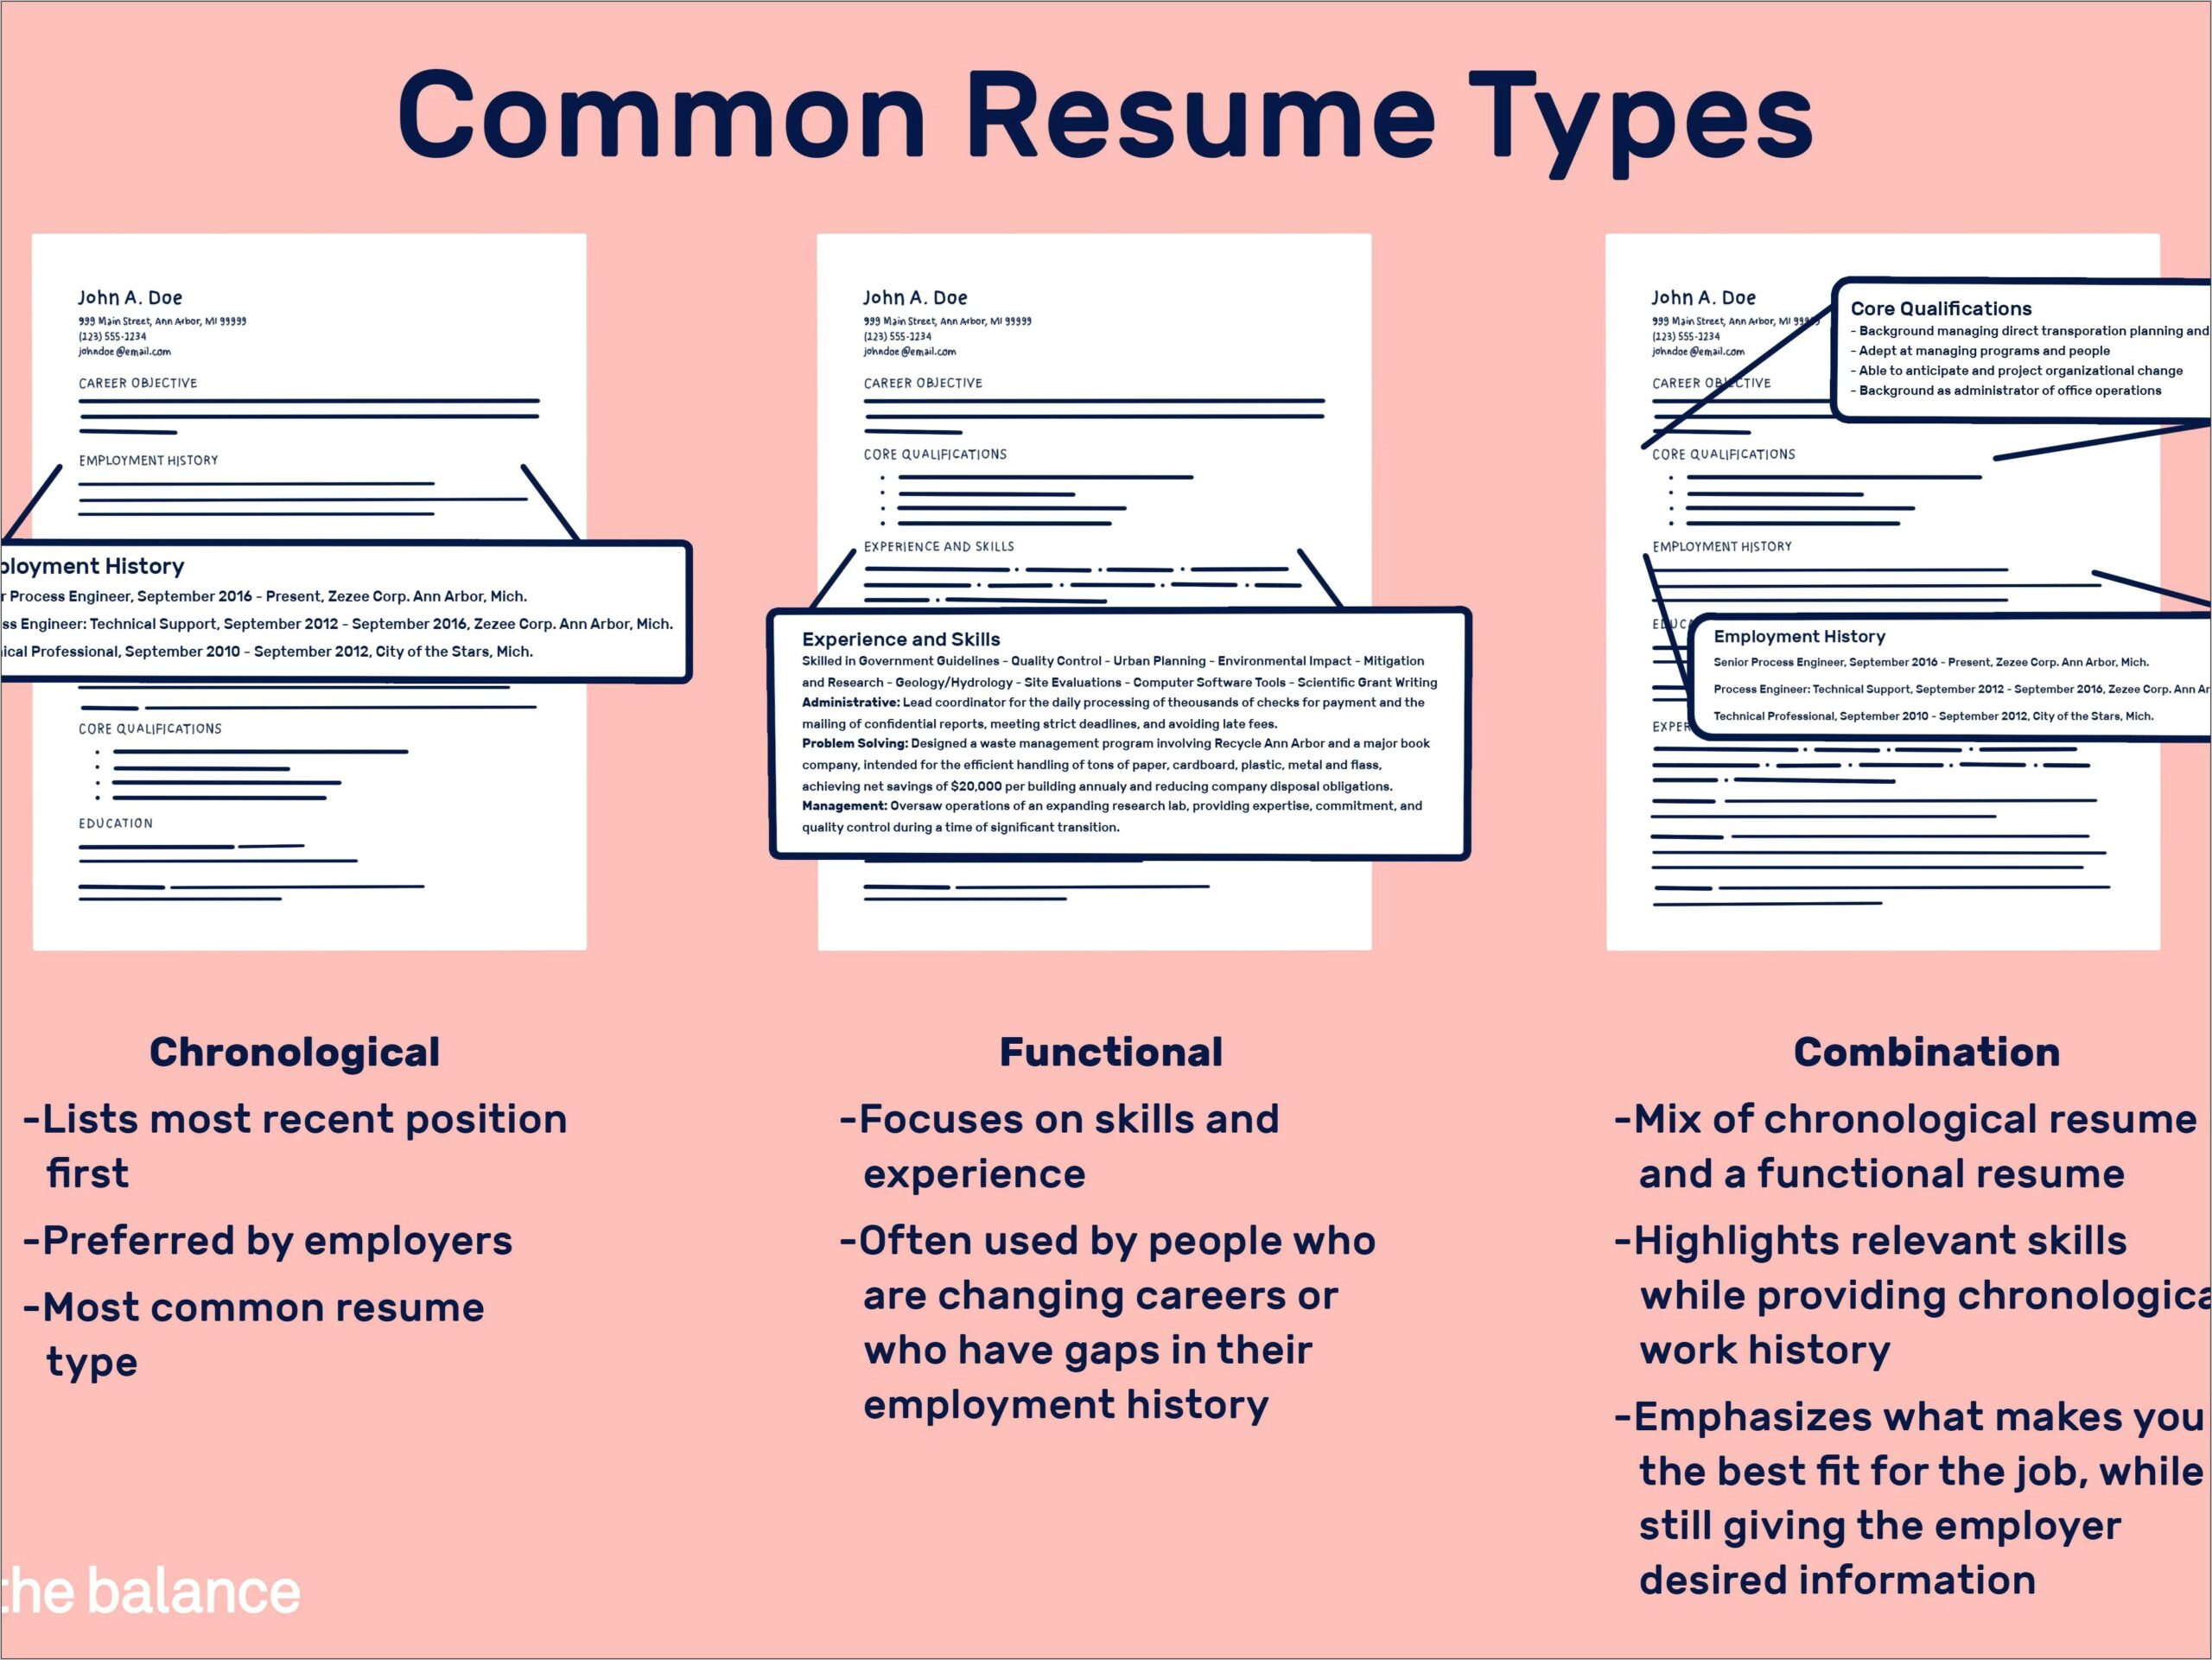 Multiple Job Titles At Same Job On Resume